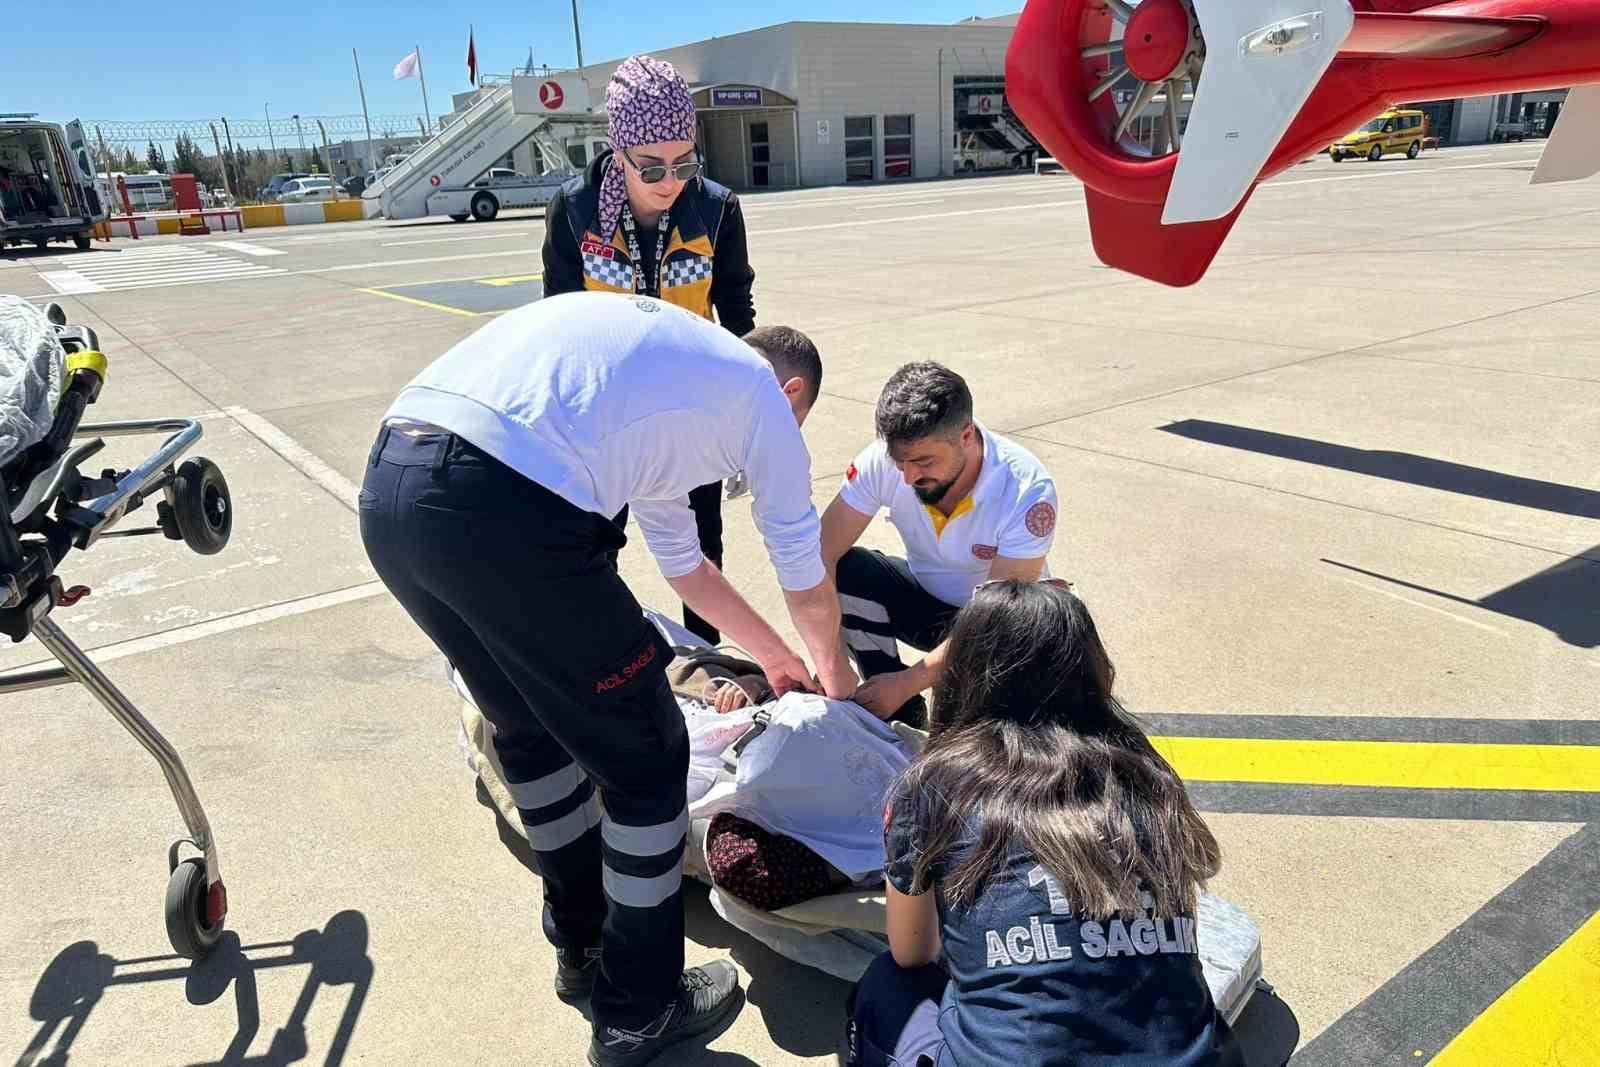 sirnakta 91 yasindaki hasta ambulans helikopter ile diyarbakira sevk edildi 1 6R6f8HTT